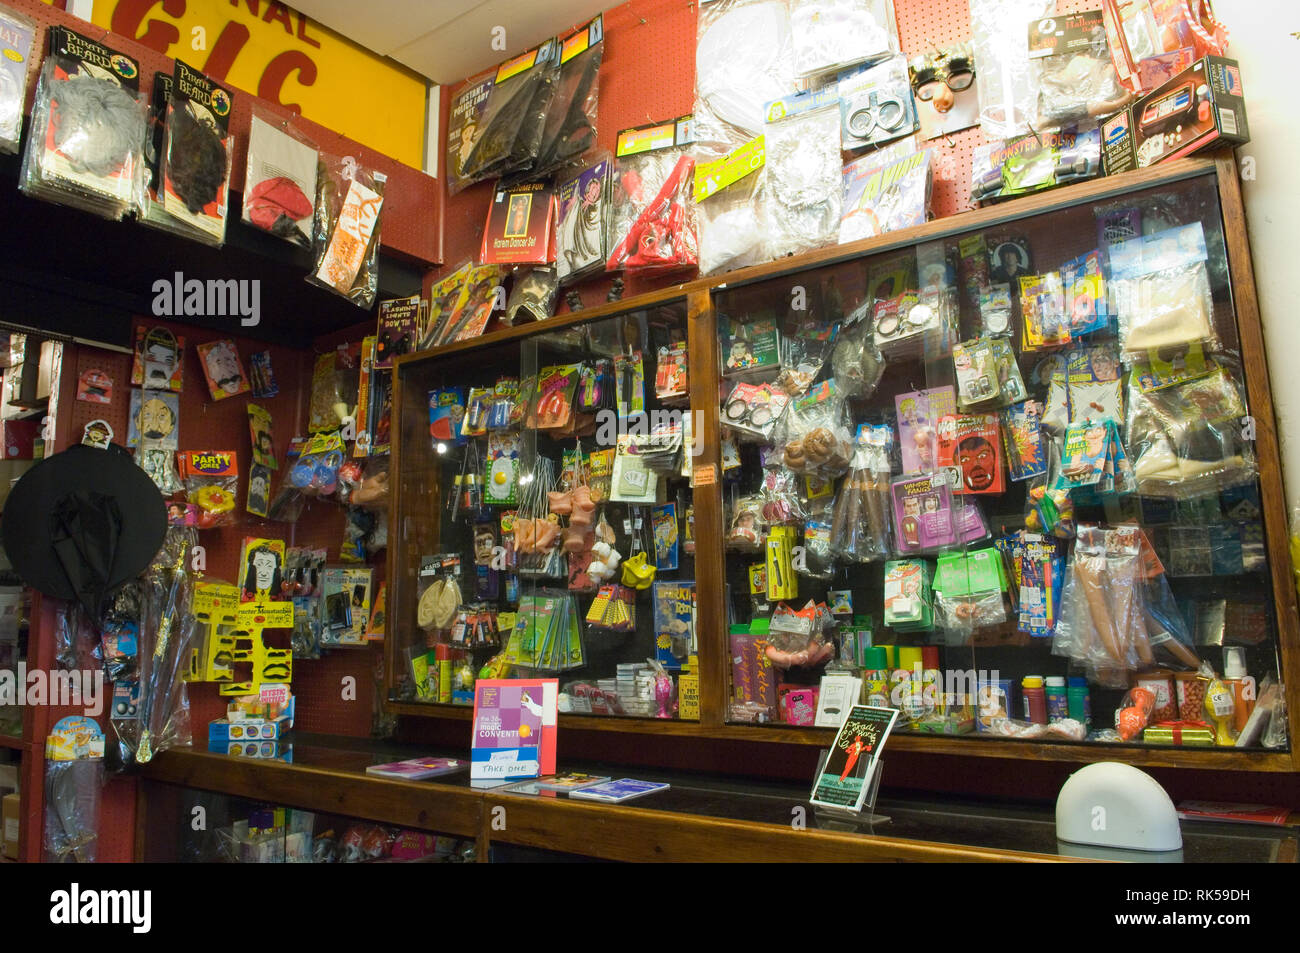 International Magic Shop - London, verkauft Magic tricks und Späße. Stockfoto